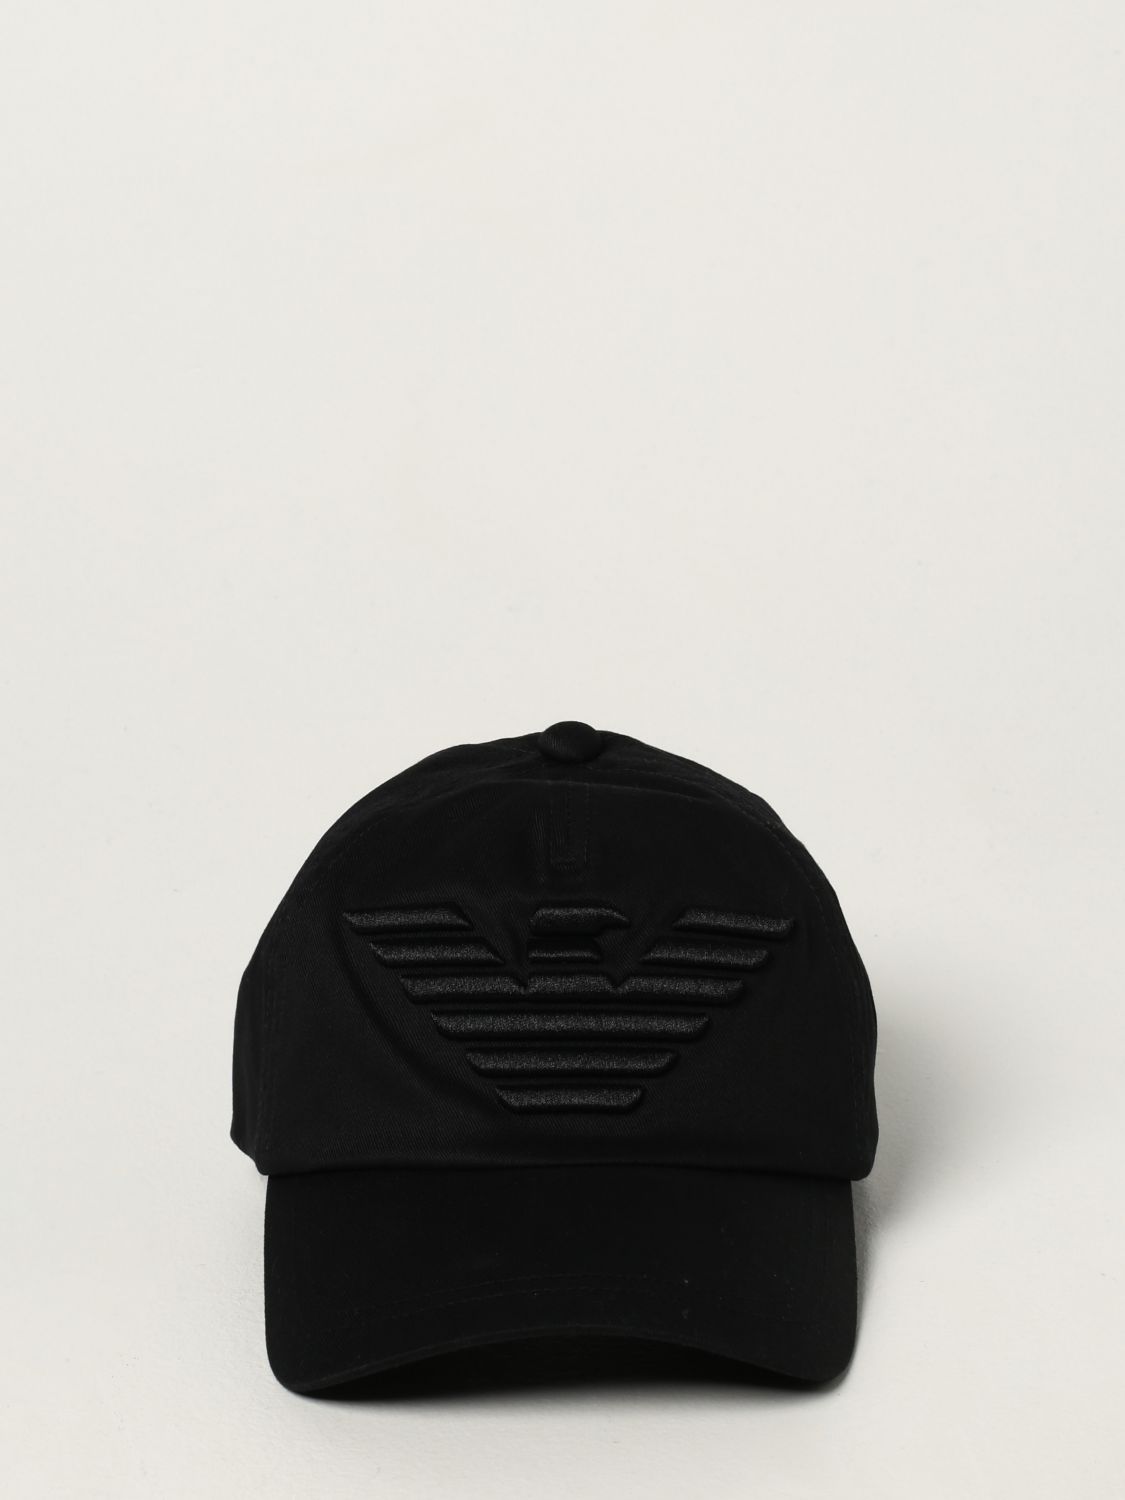 Emporio Armani hat with eagle logo